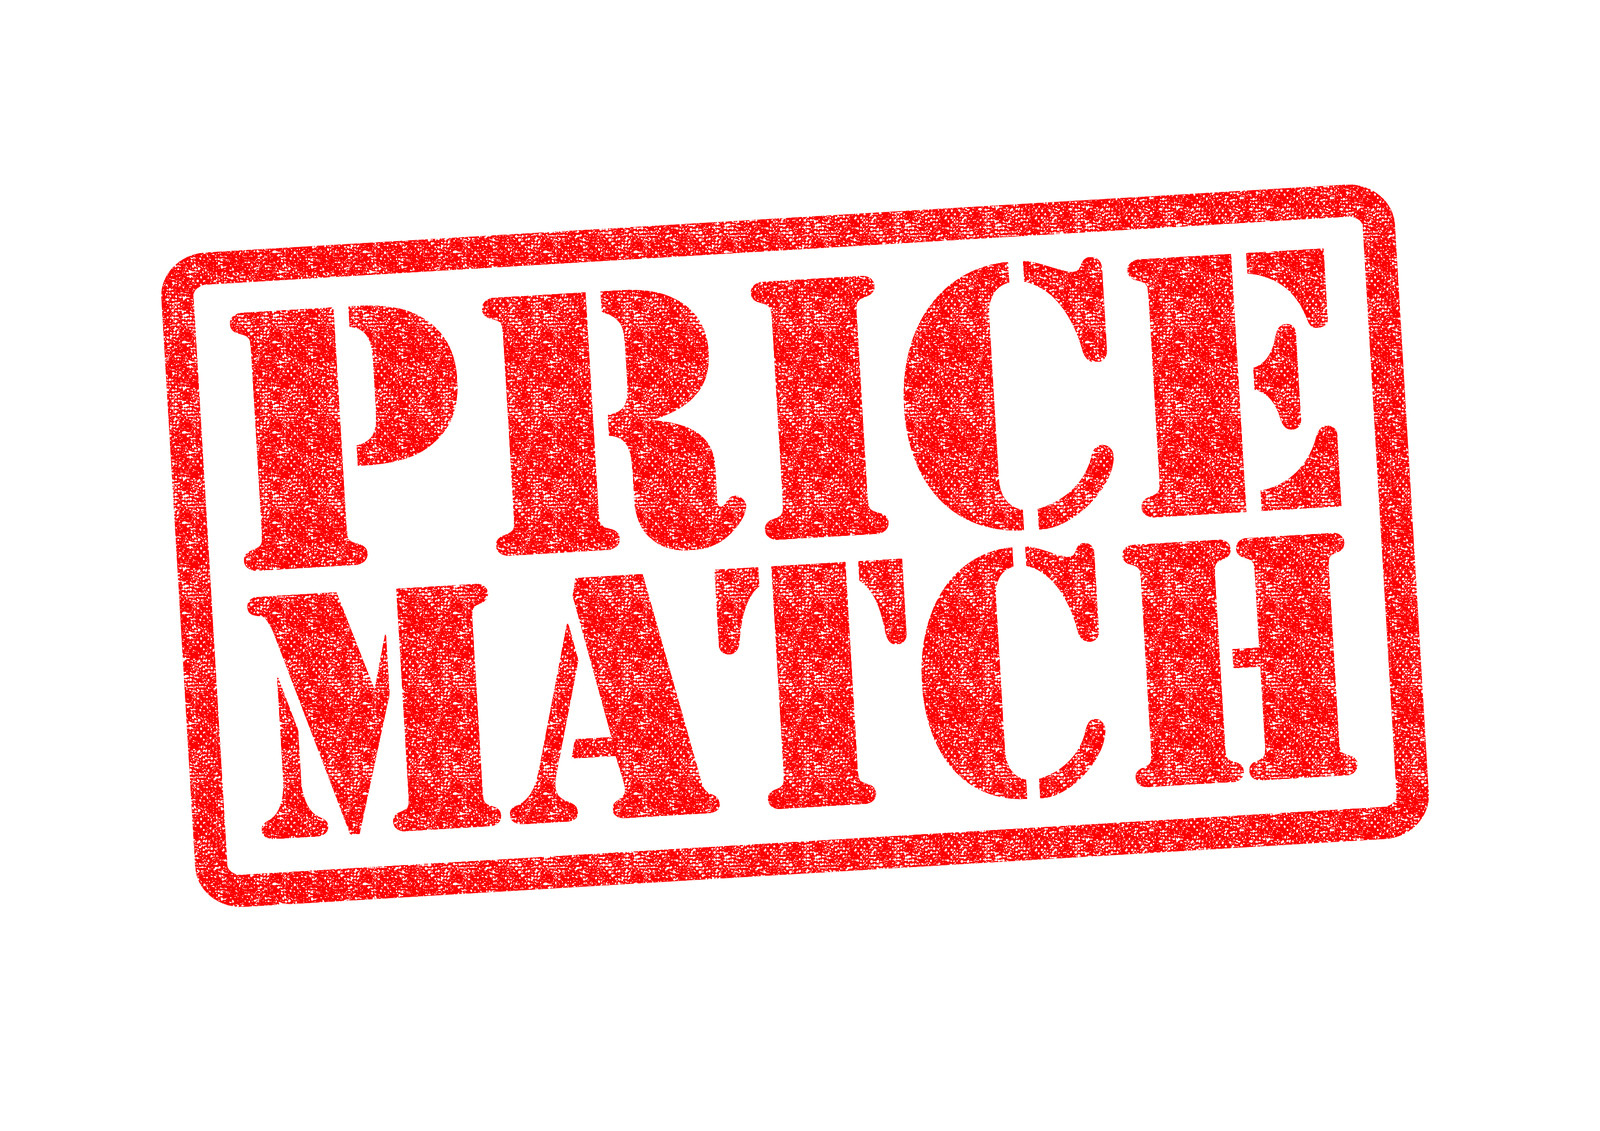 Price matching. Price Match. Home Depot Price Match. Price Match guarantee. Price Match Promise.